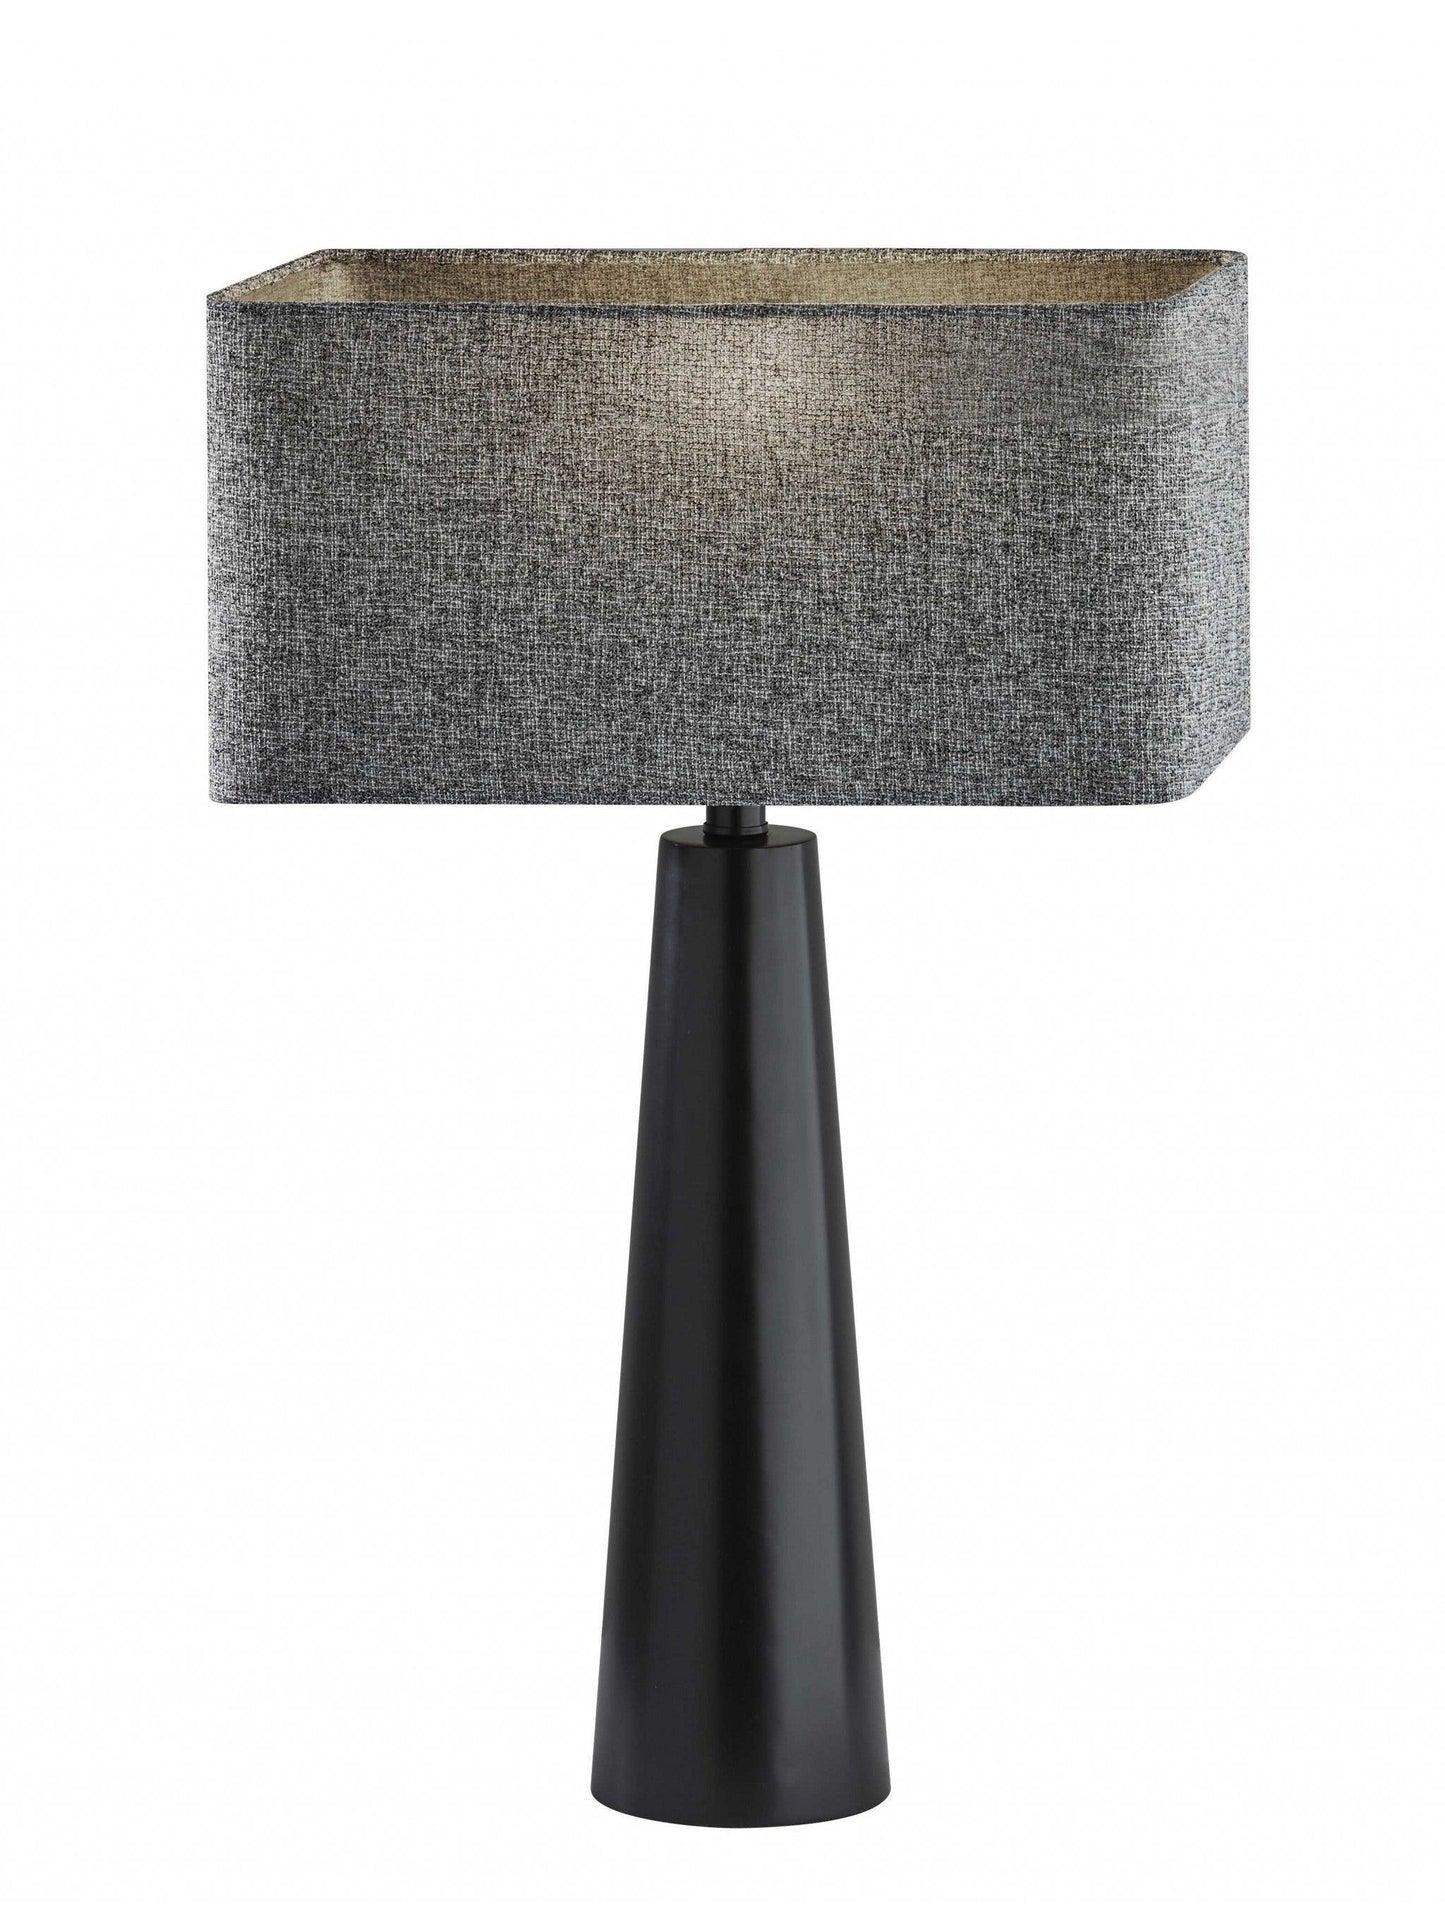 Urban Edge Black Metal Table Lamp - AFS